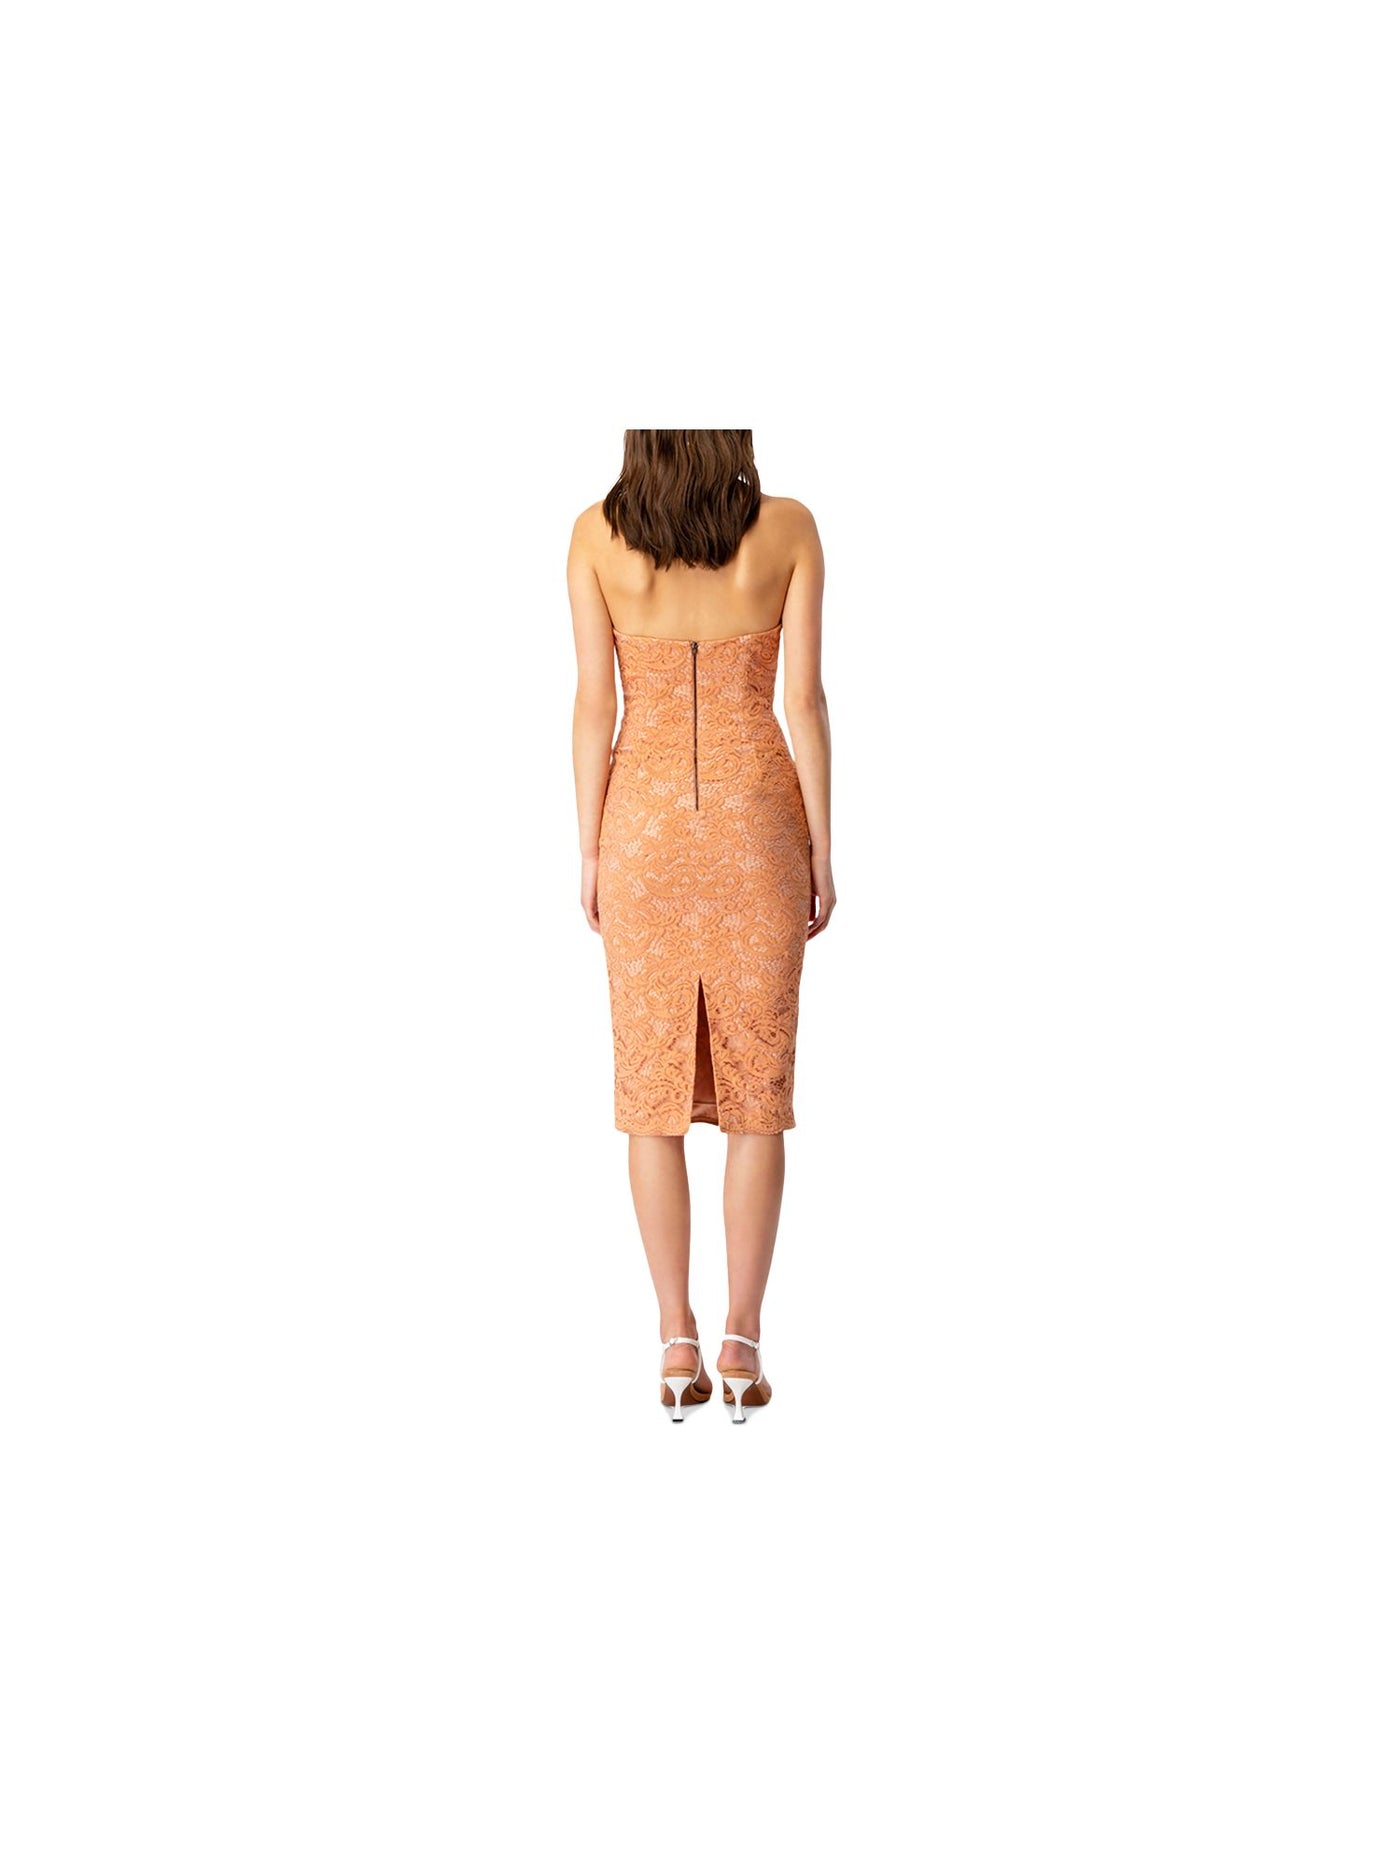 BARDOT Womens Orange Slitted Zippered Corset Boning Lined Lace Sleeveless Halter Below The Knee Evening Sheath Dress 12